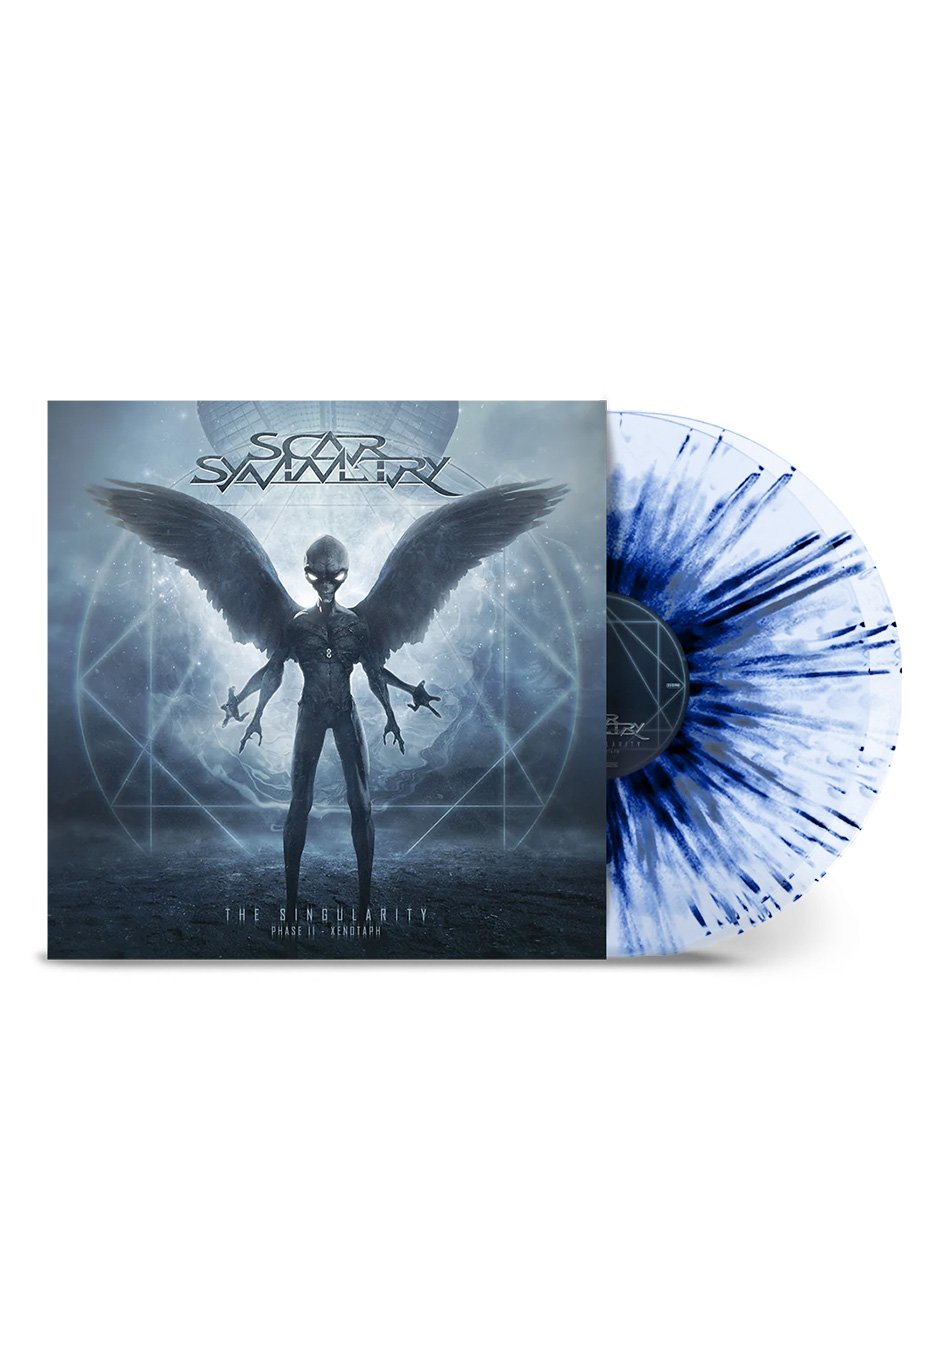 Scar Symmetry - The Singularity (Phase II - Xenotaph) Clear/Sky Blue - Splattered 2 Vinyl